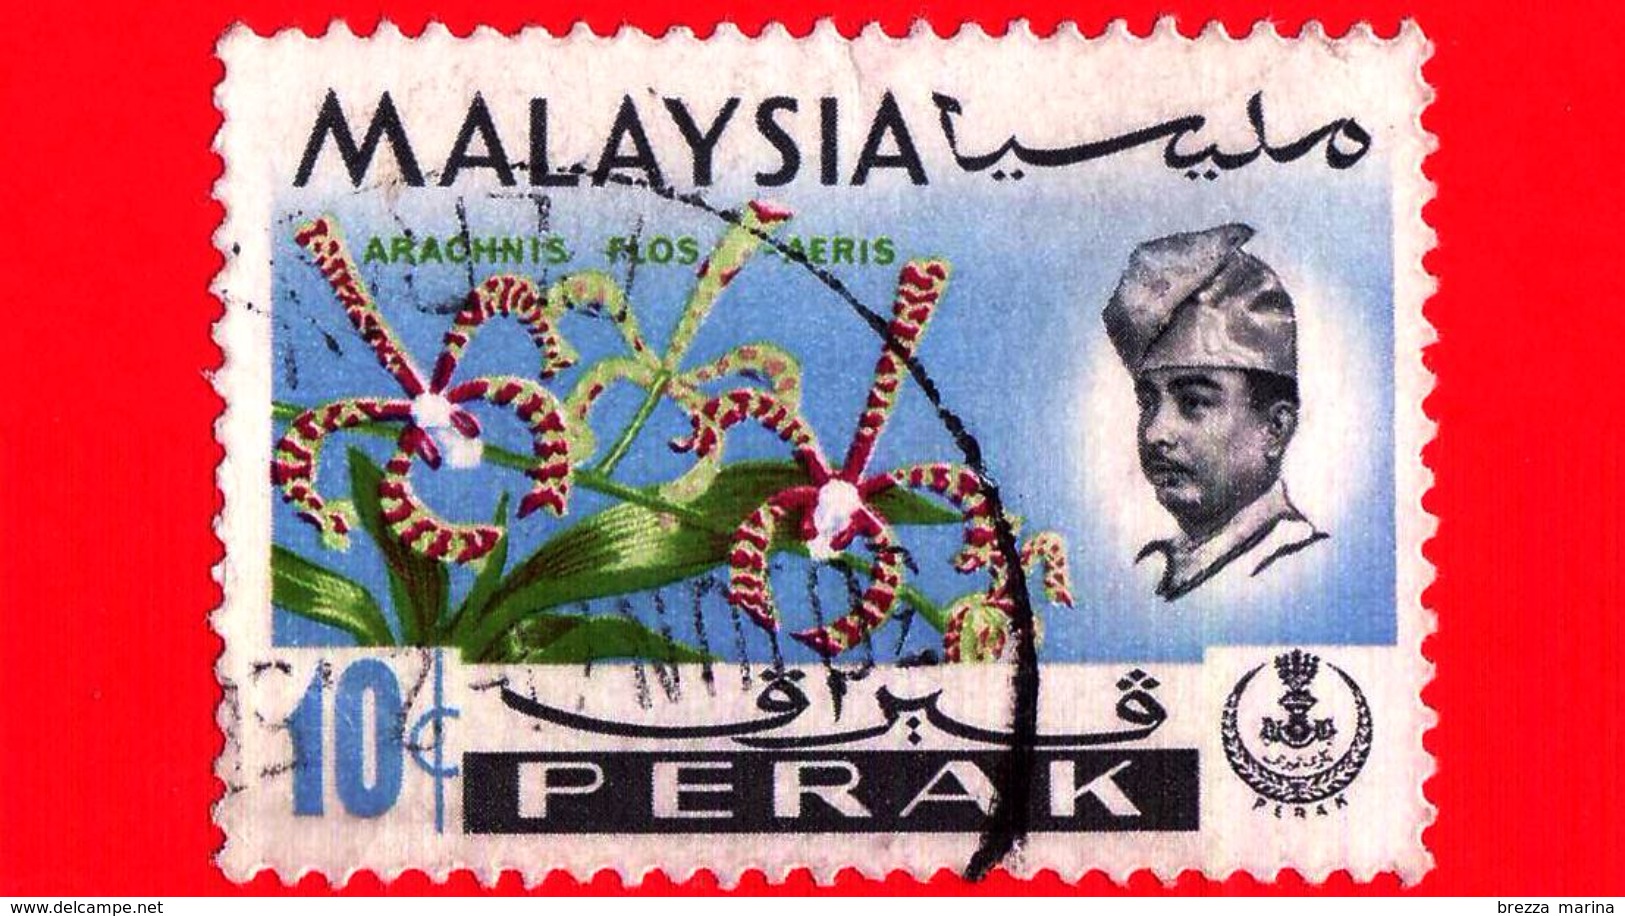 MALESIA - MALAYSIA - Usato - 1965 - PERAK - Orchidee - Arachnanthe Moschifera - Sultano Idris Shah - 10 - Malesia (1964-...)